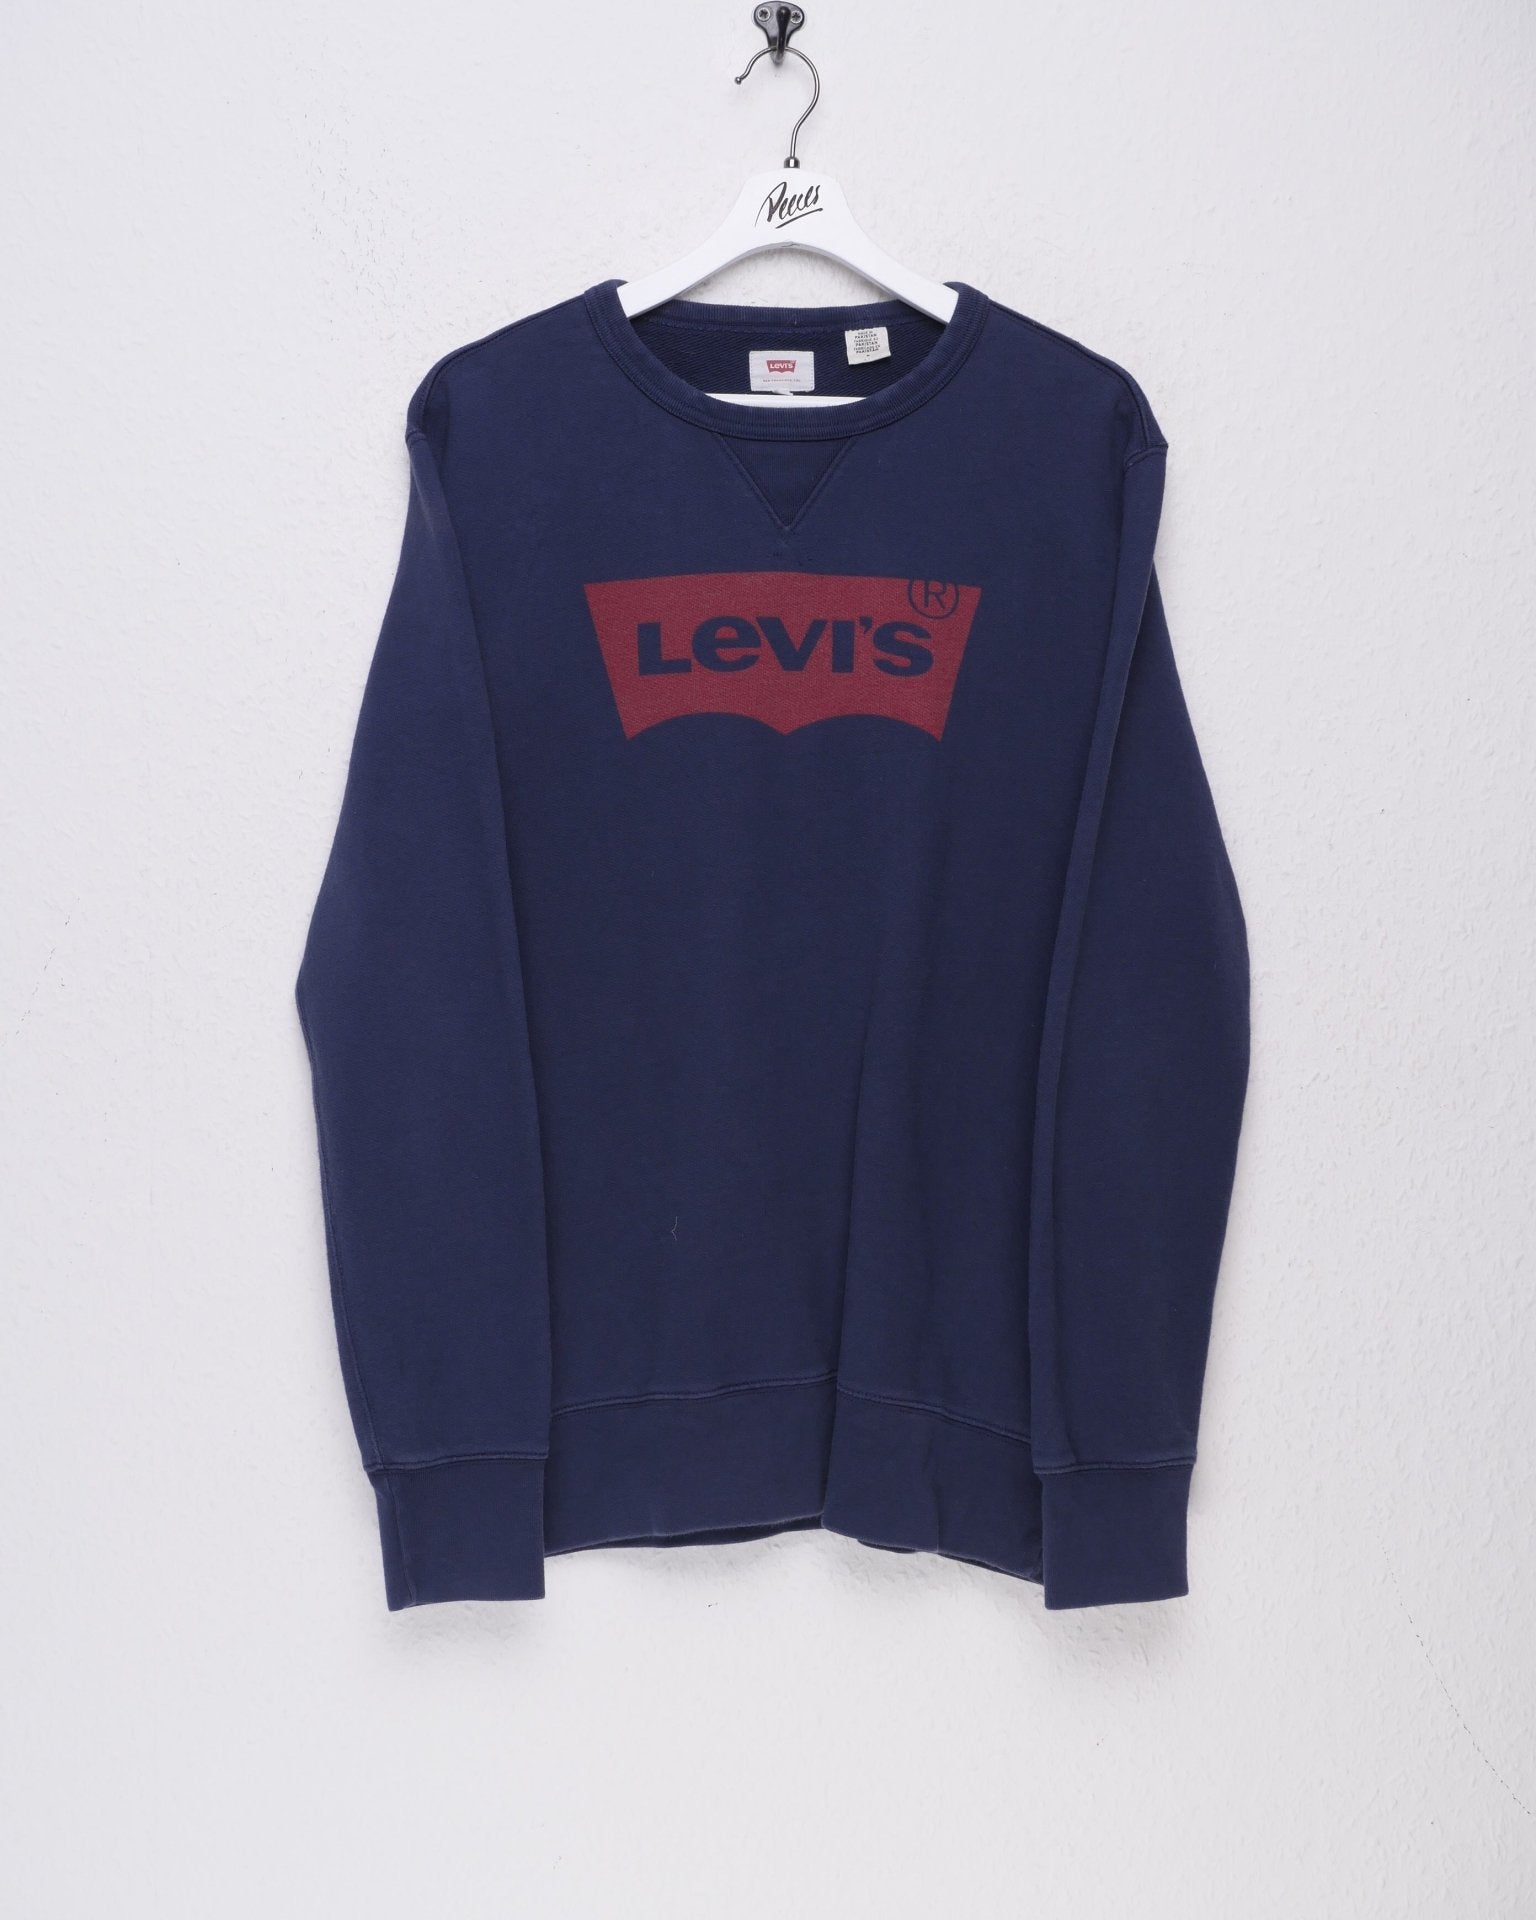 Levi's printed Logo basic Sweater - Peeces